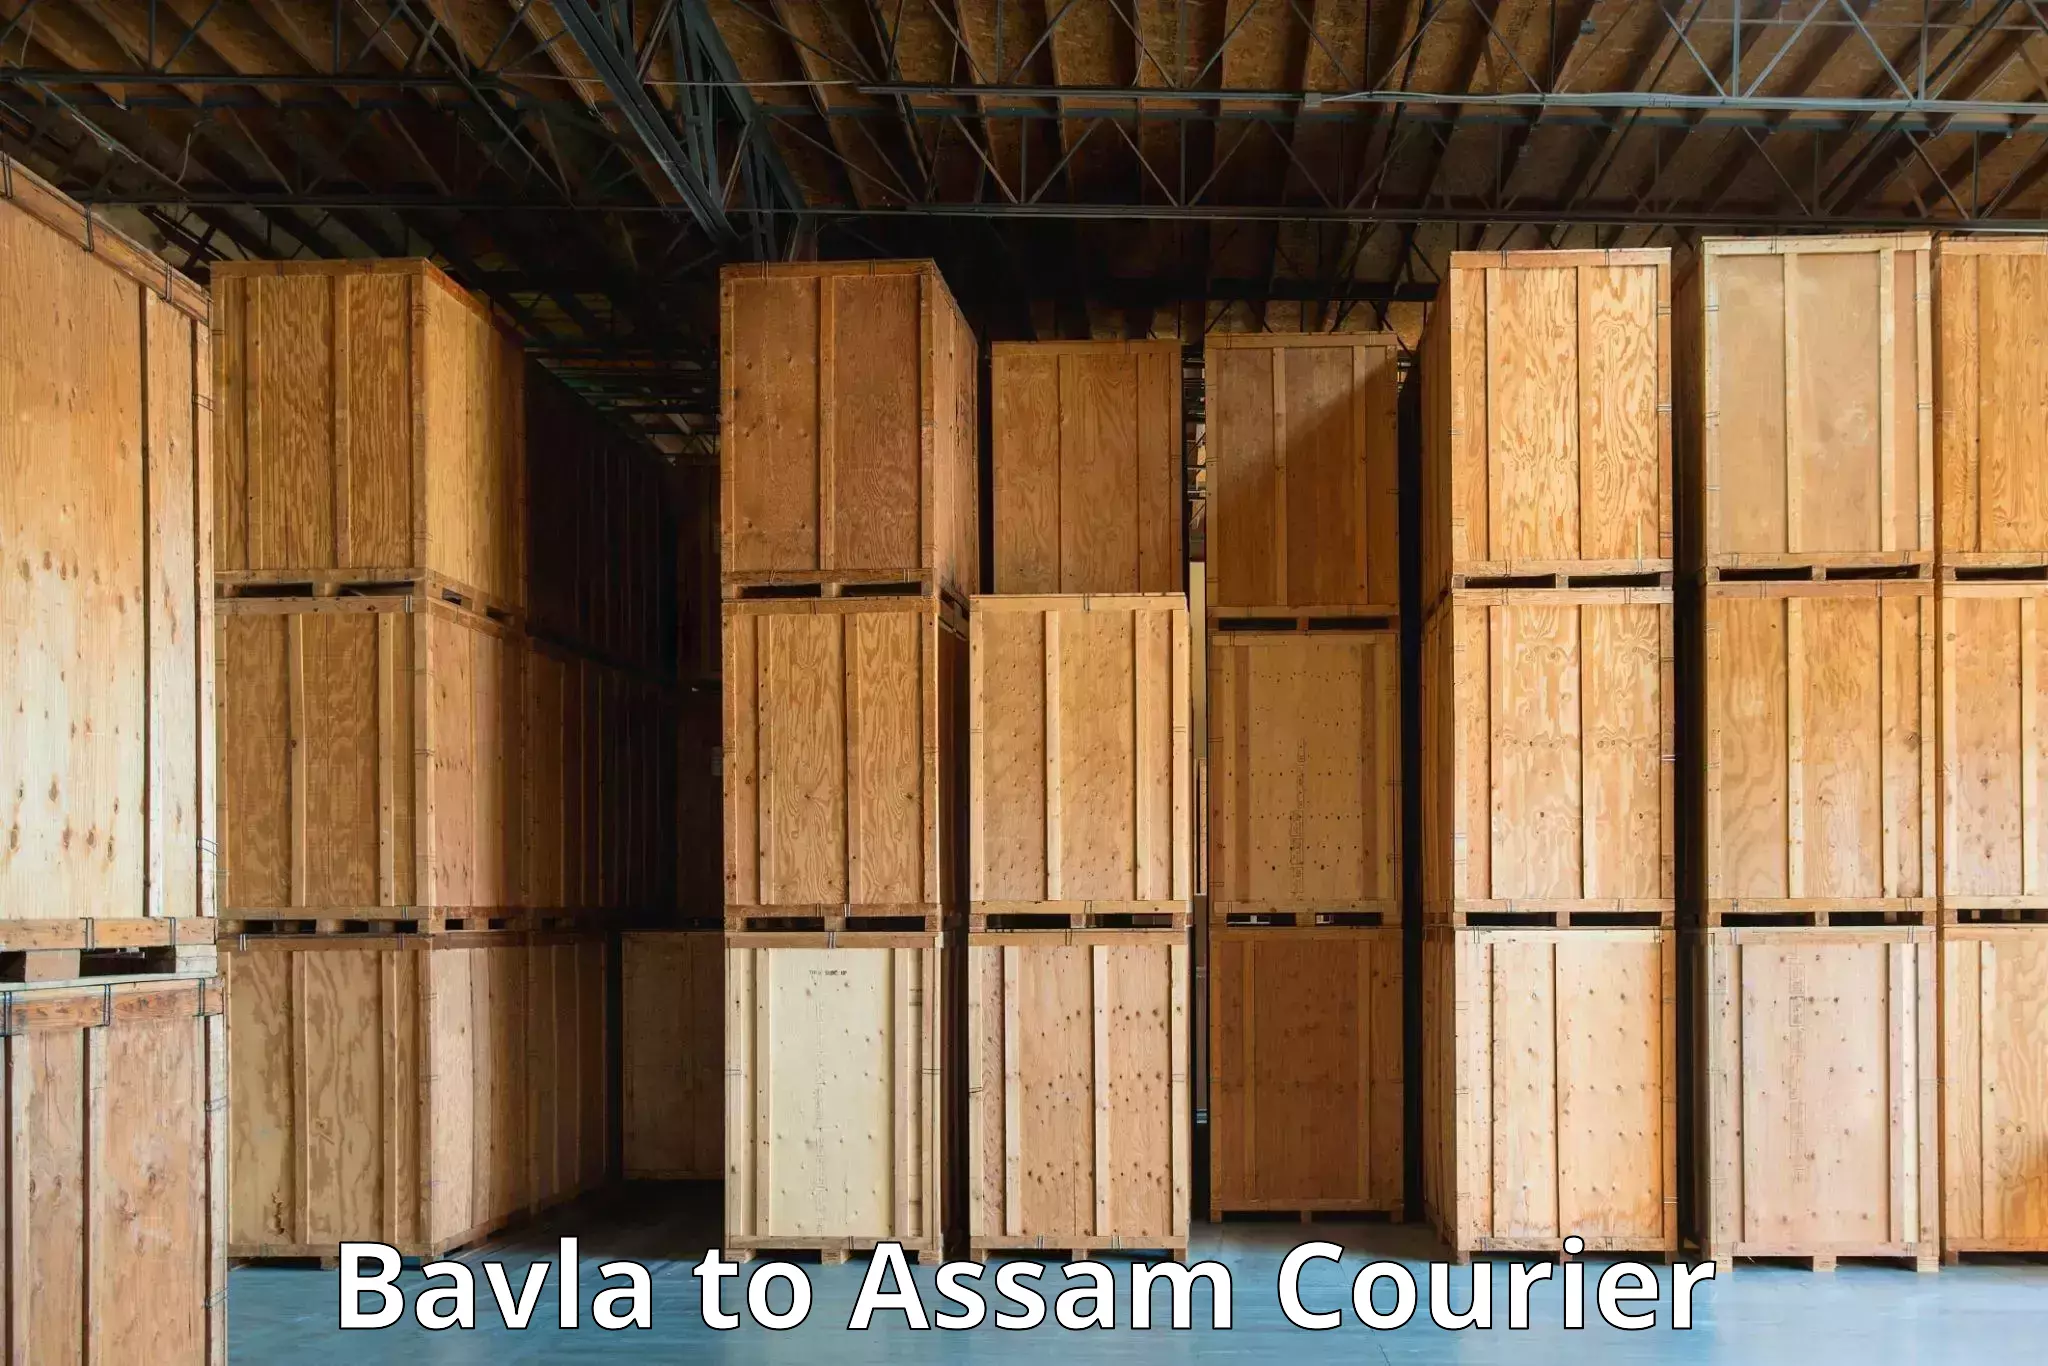 Courier app Bavla to Kampur